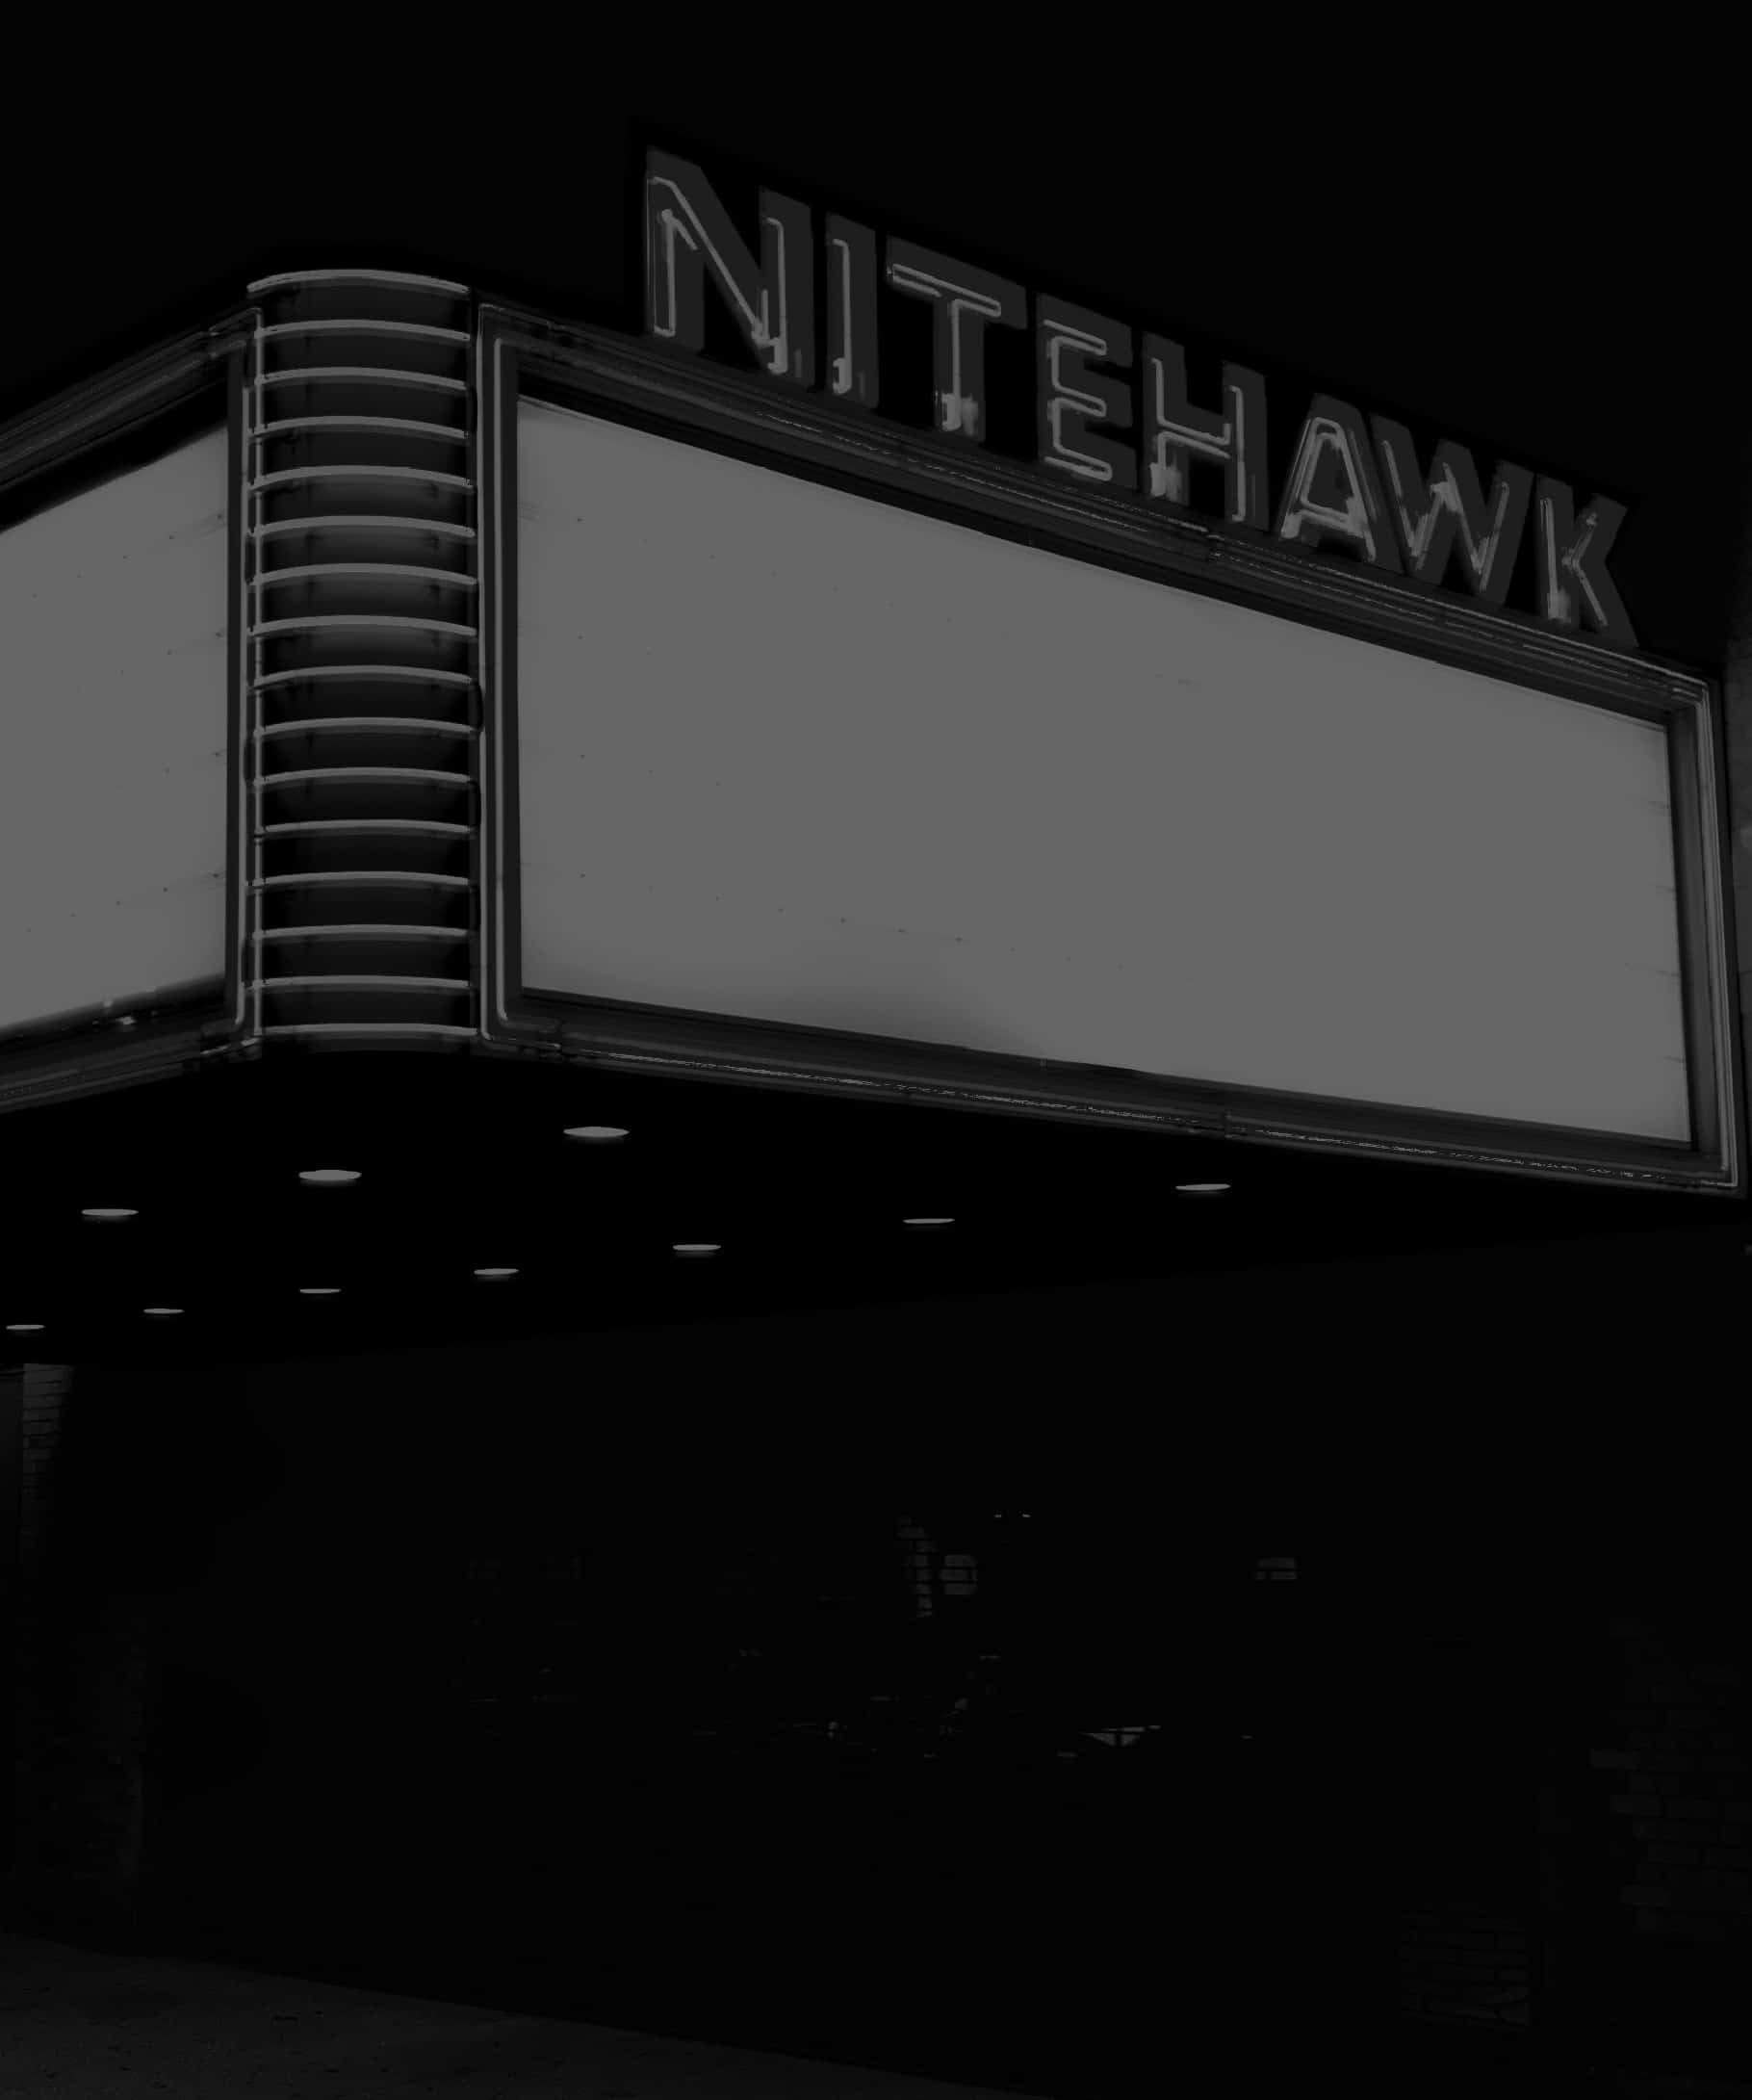 Nitehawk Cinema Prospect Park